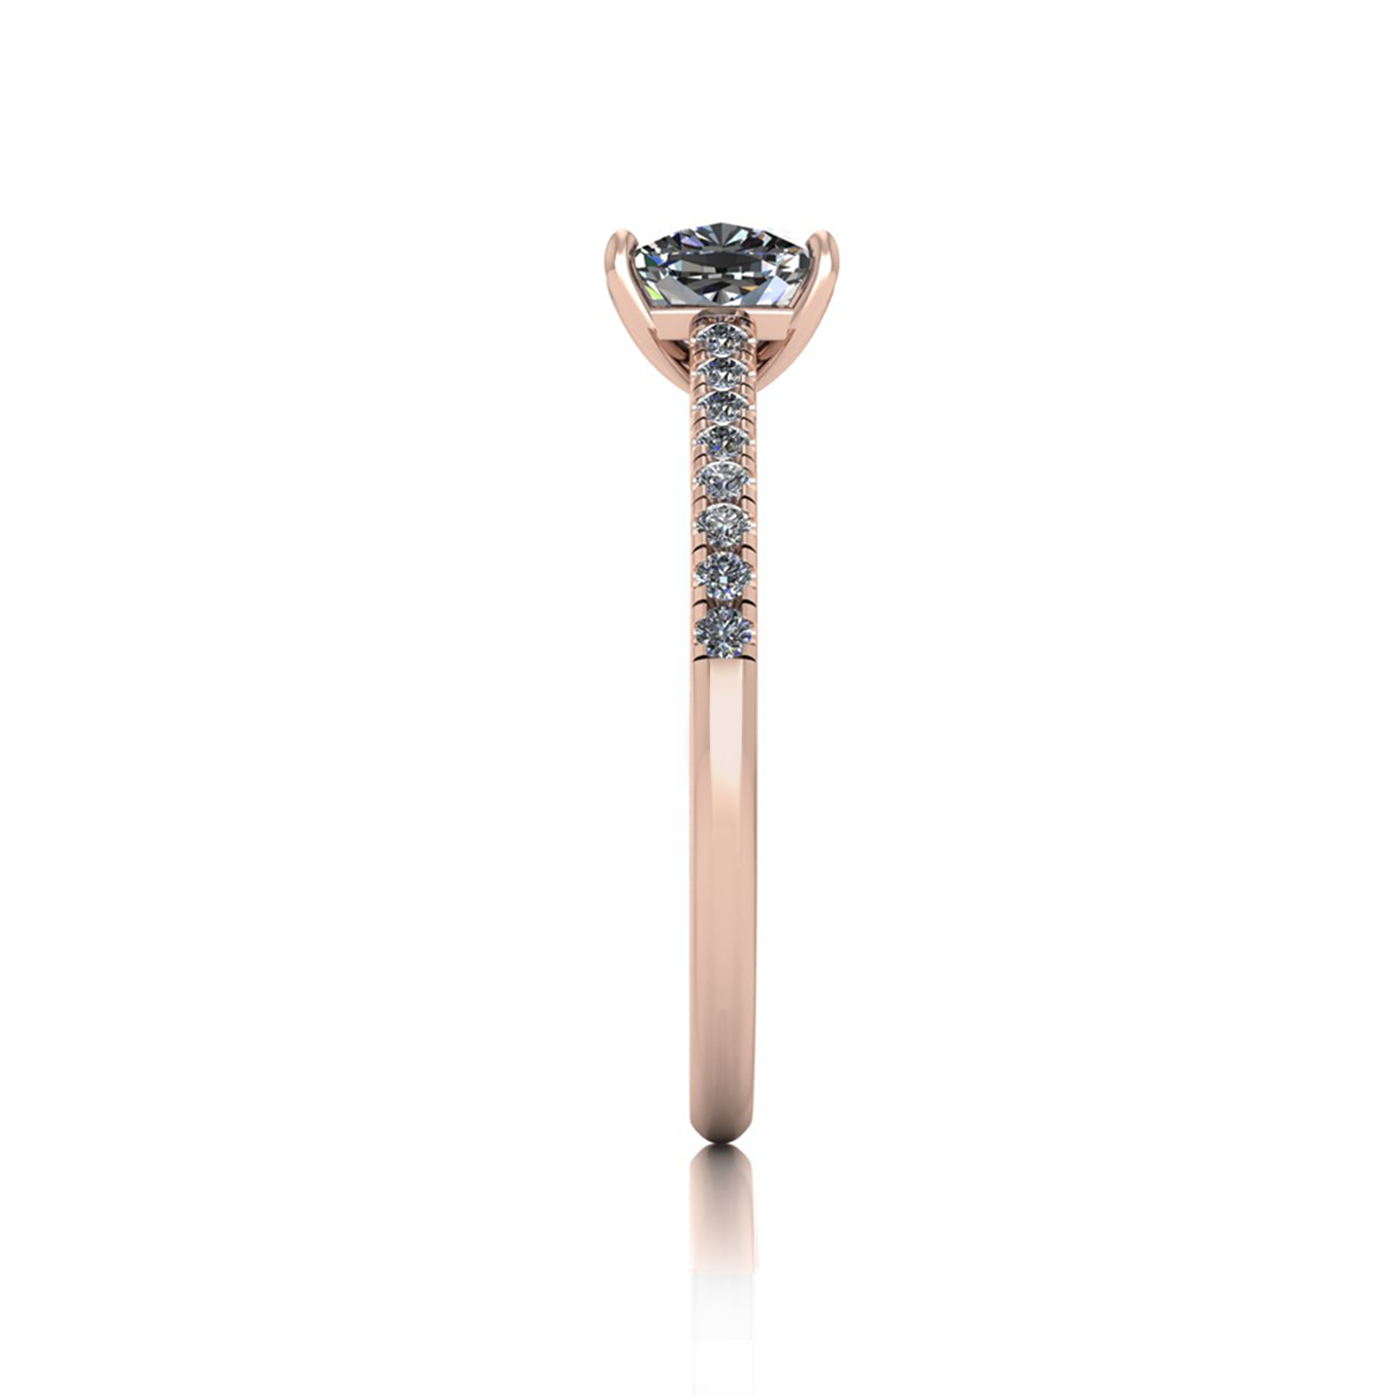 18k rose gold  0,30 ct 4 prongs cushion cut diamond engagement ring with whisper thin pavÉ set band